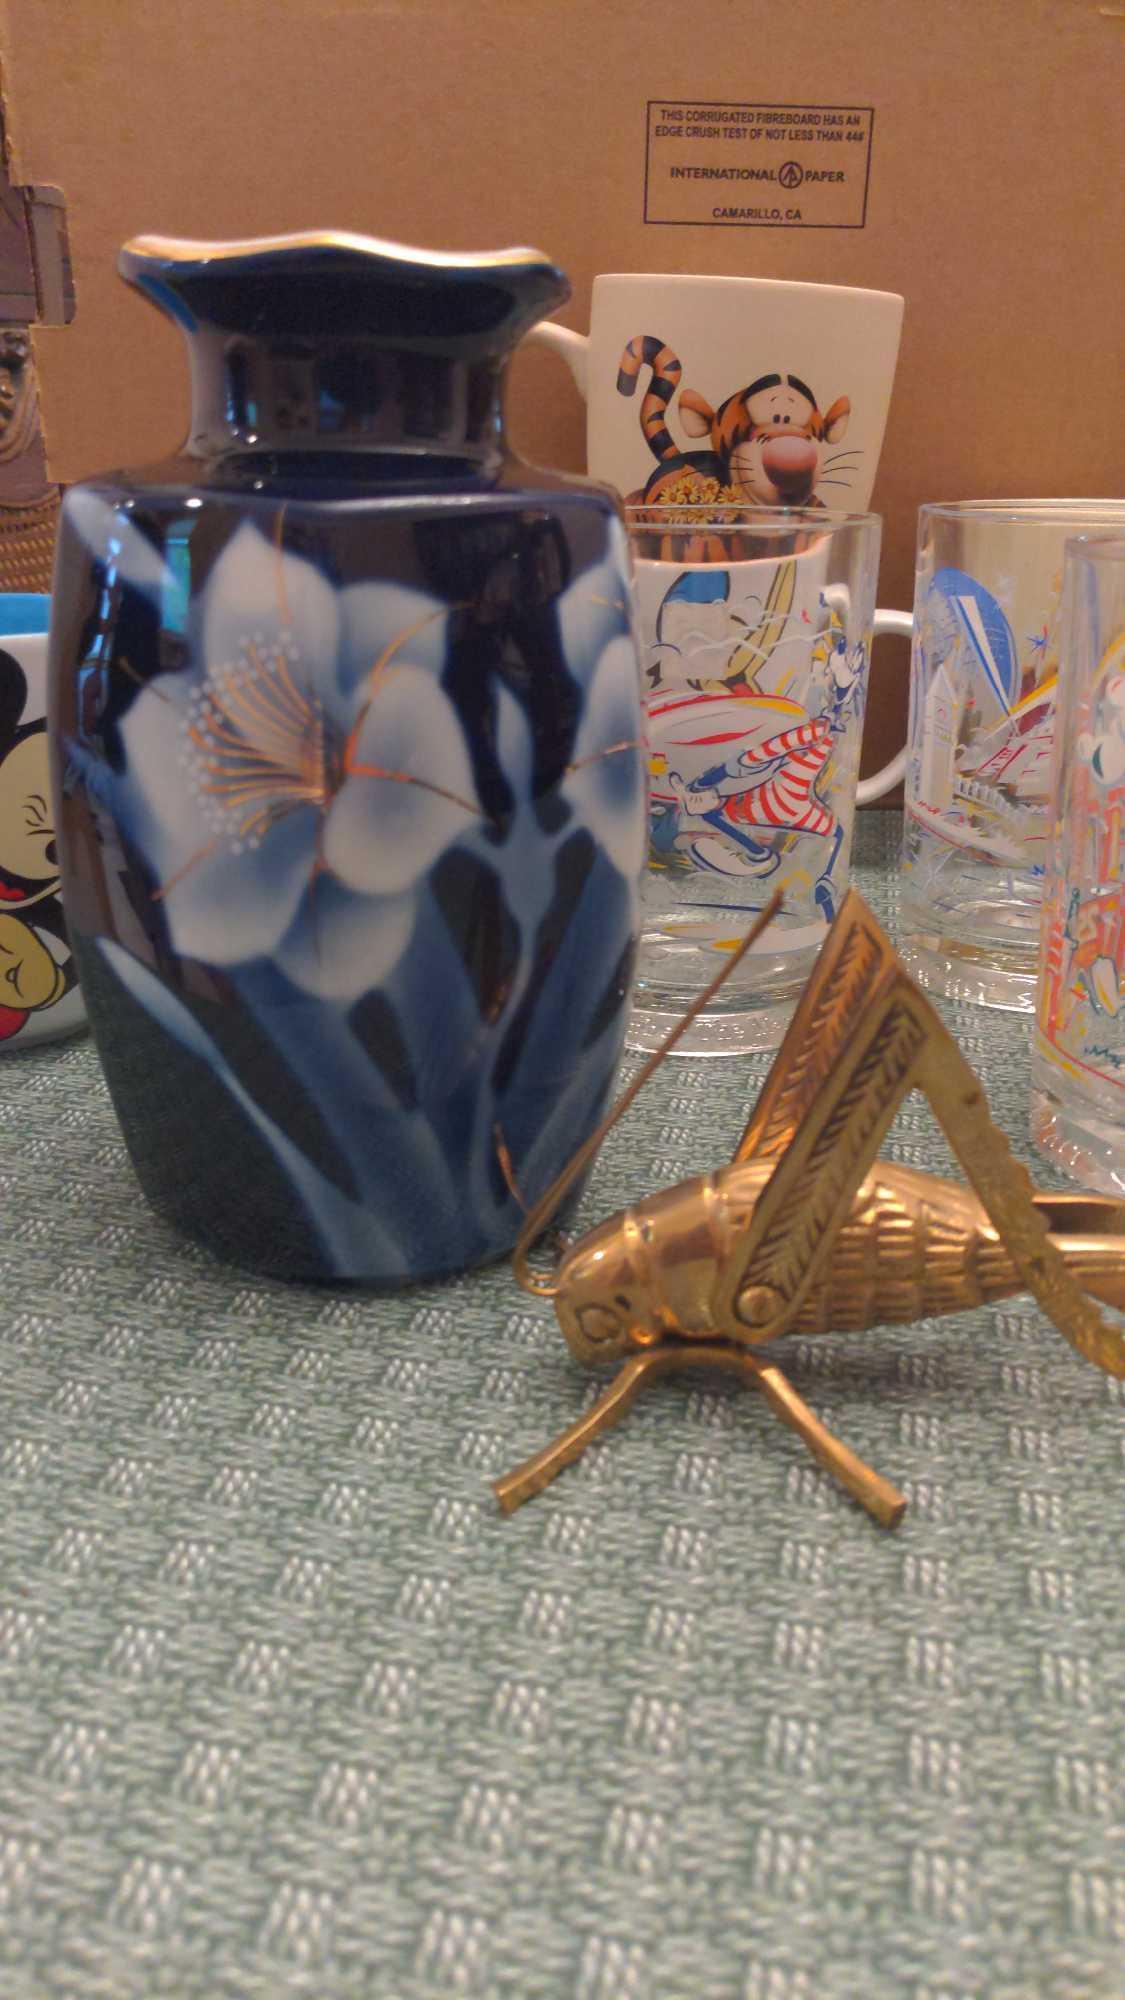 Japanese Porcelain Vase, Brass Grasshopper paperweight, & collectible glassware